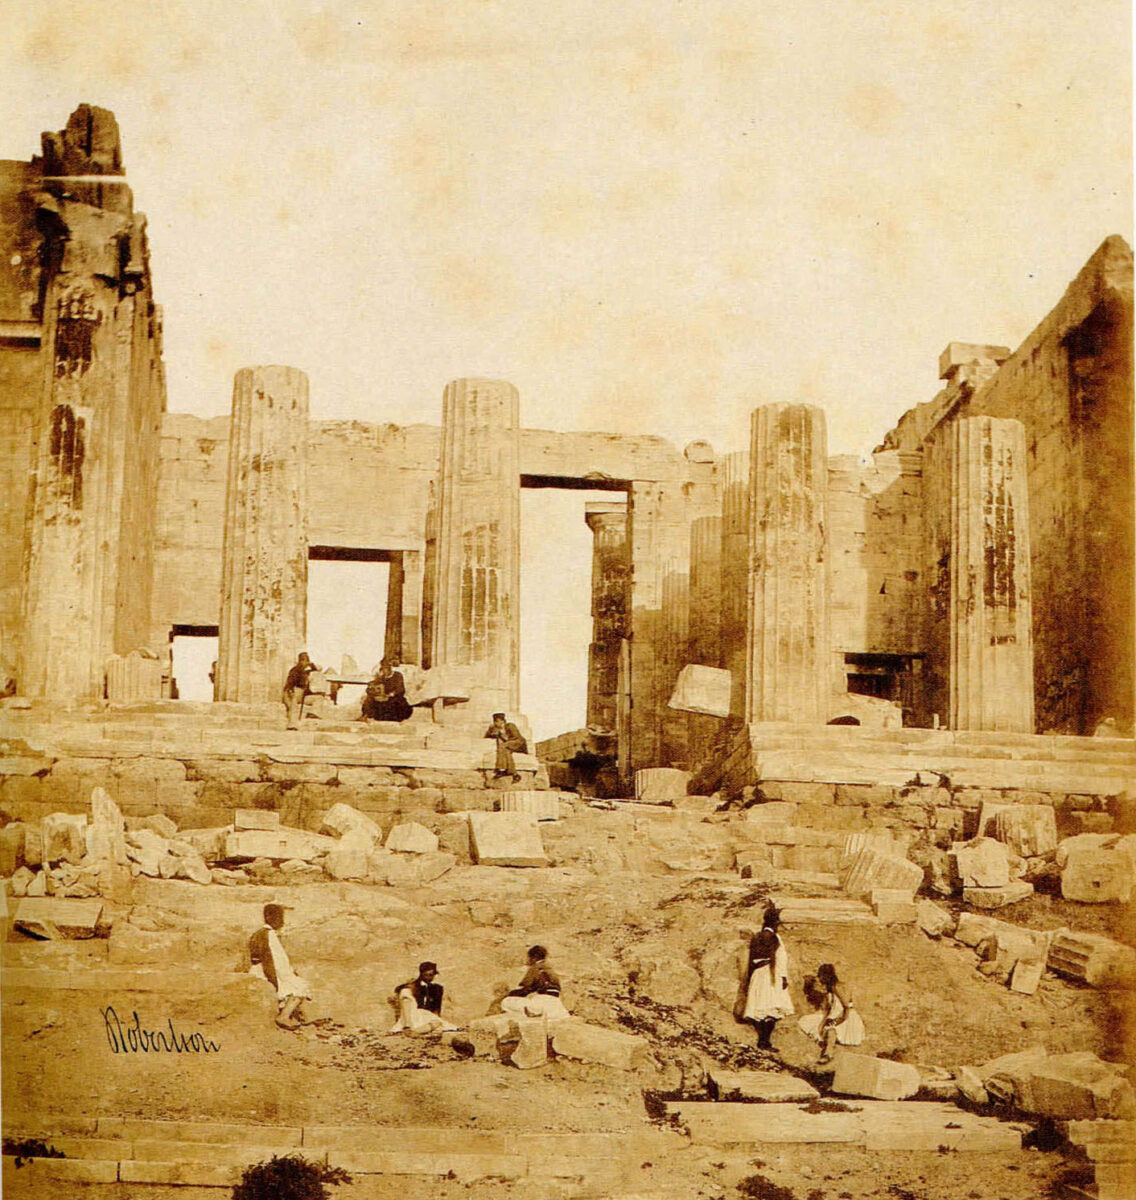 The west entrance to the Acropolis (image source: MOCAS) 